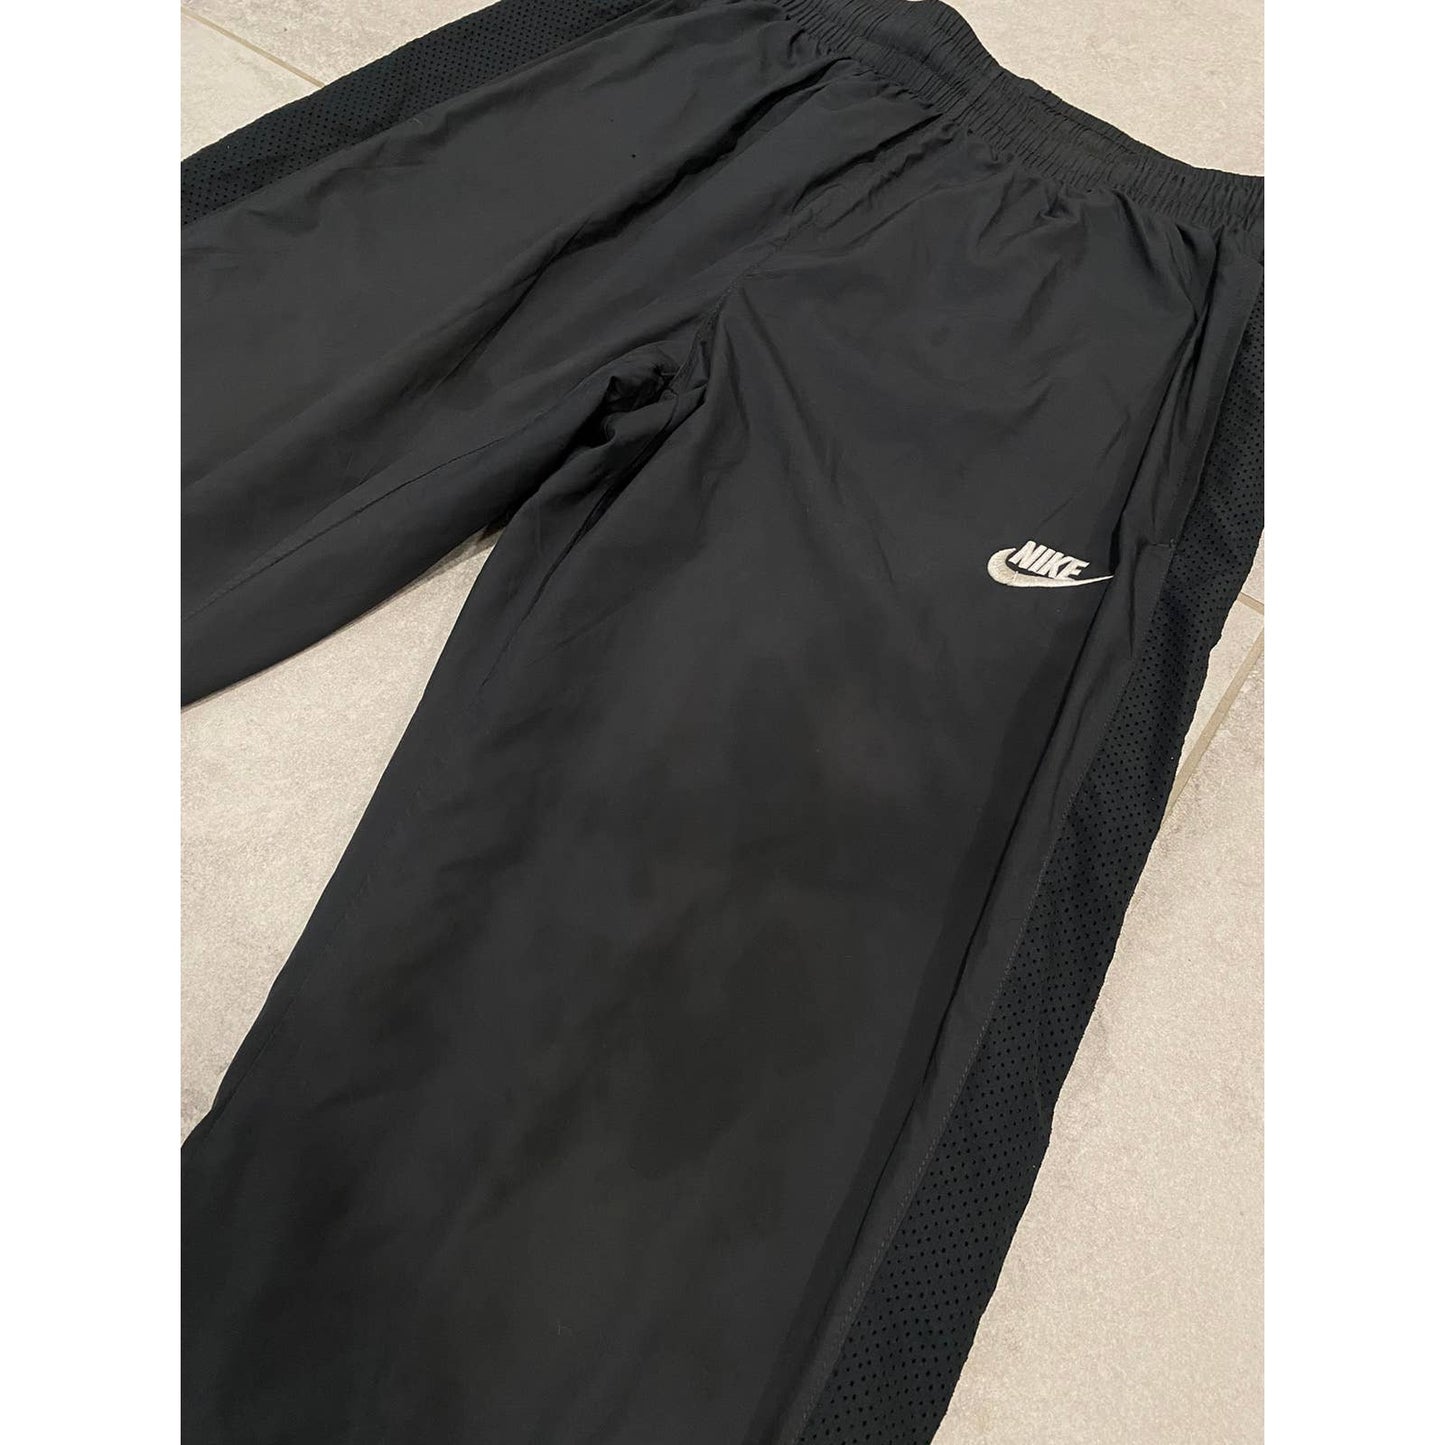 Nike vintage black track pants small swoosh 2000s